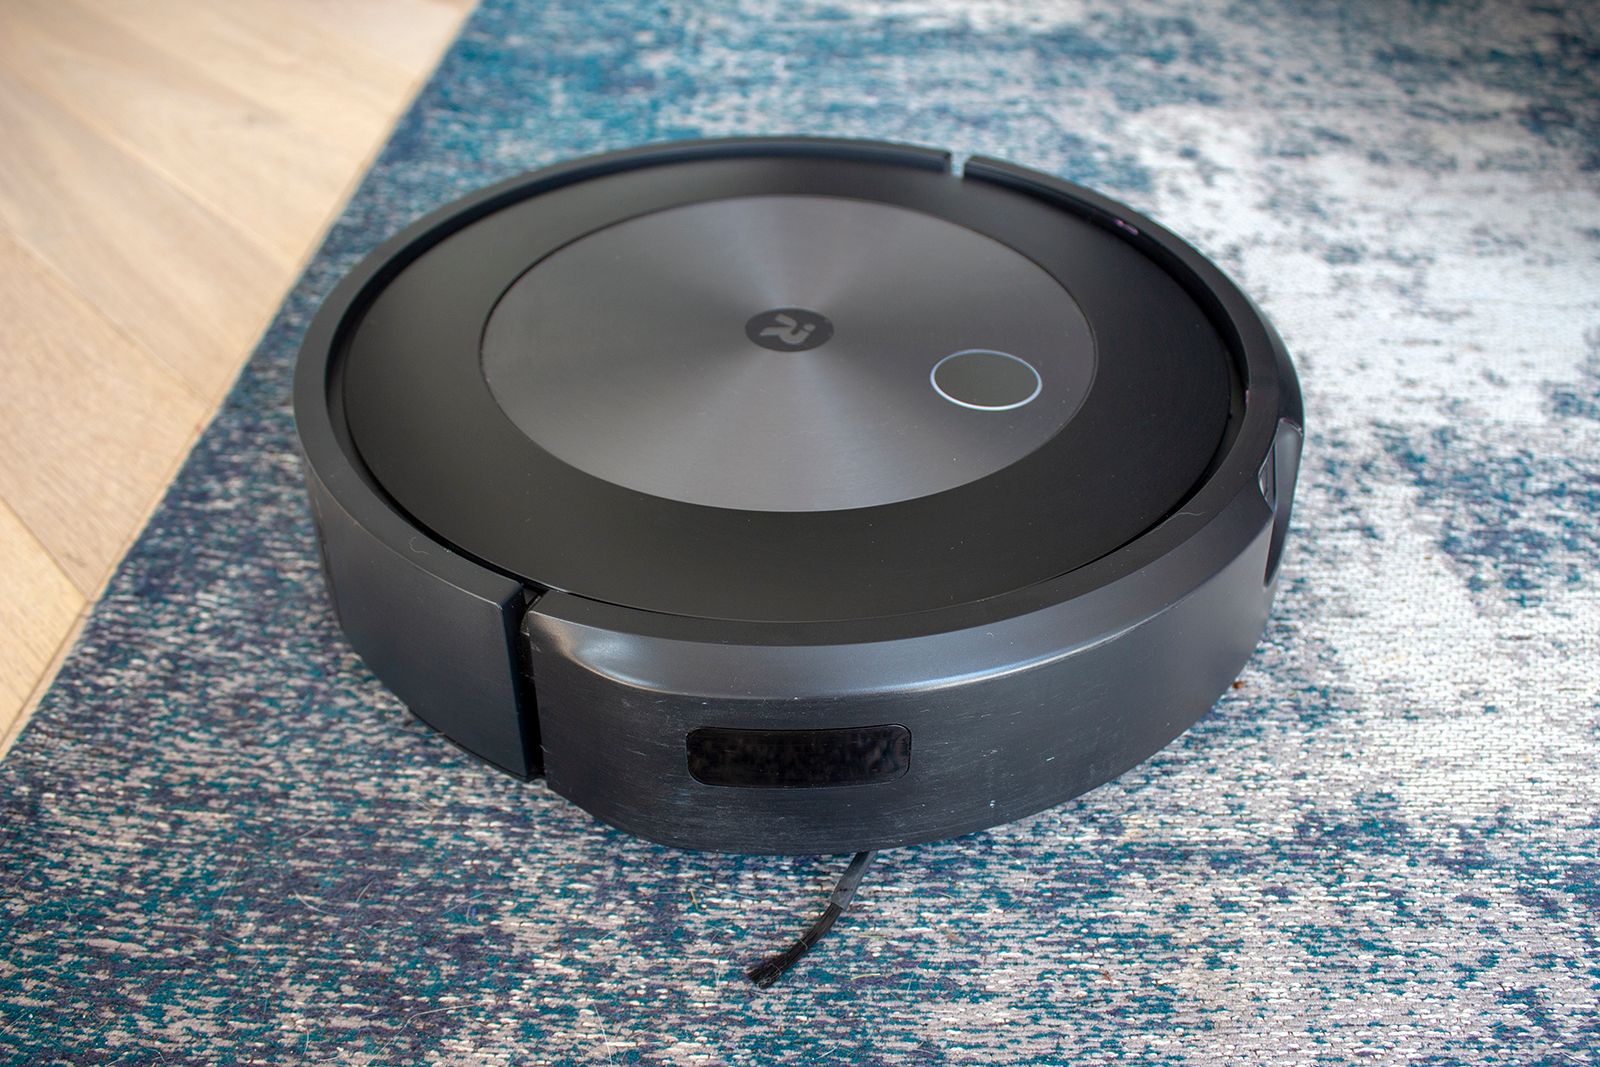 iRobot Roomba J7+ product shots photo 9